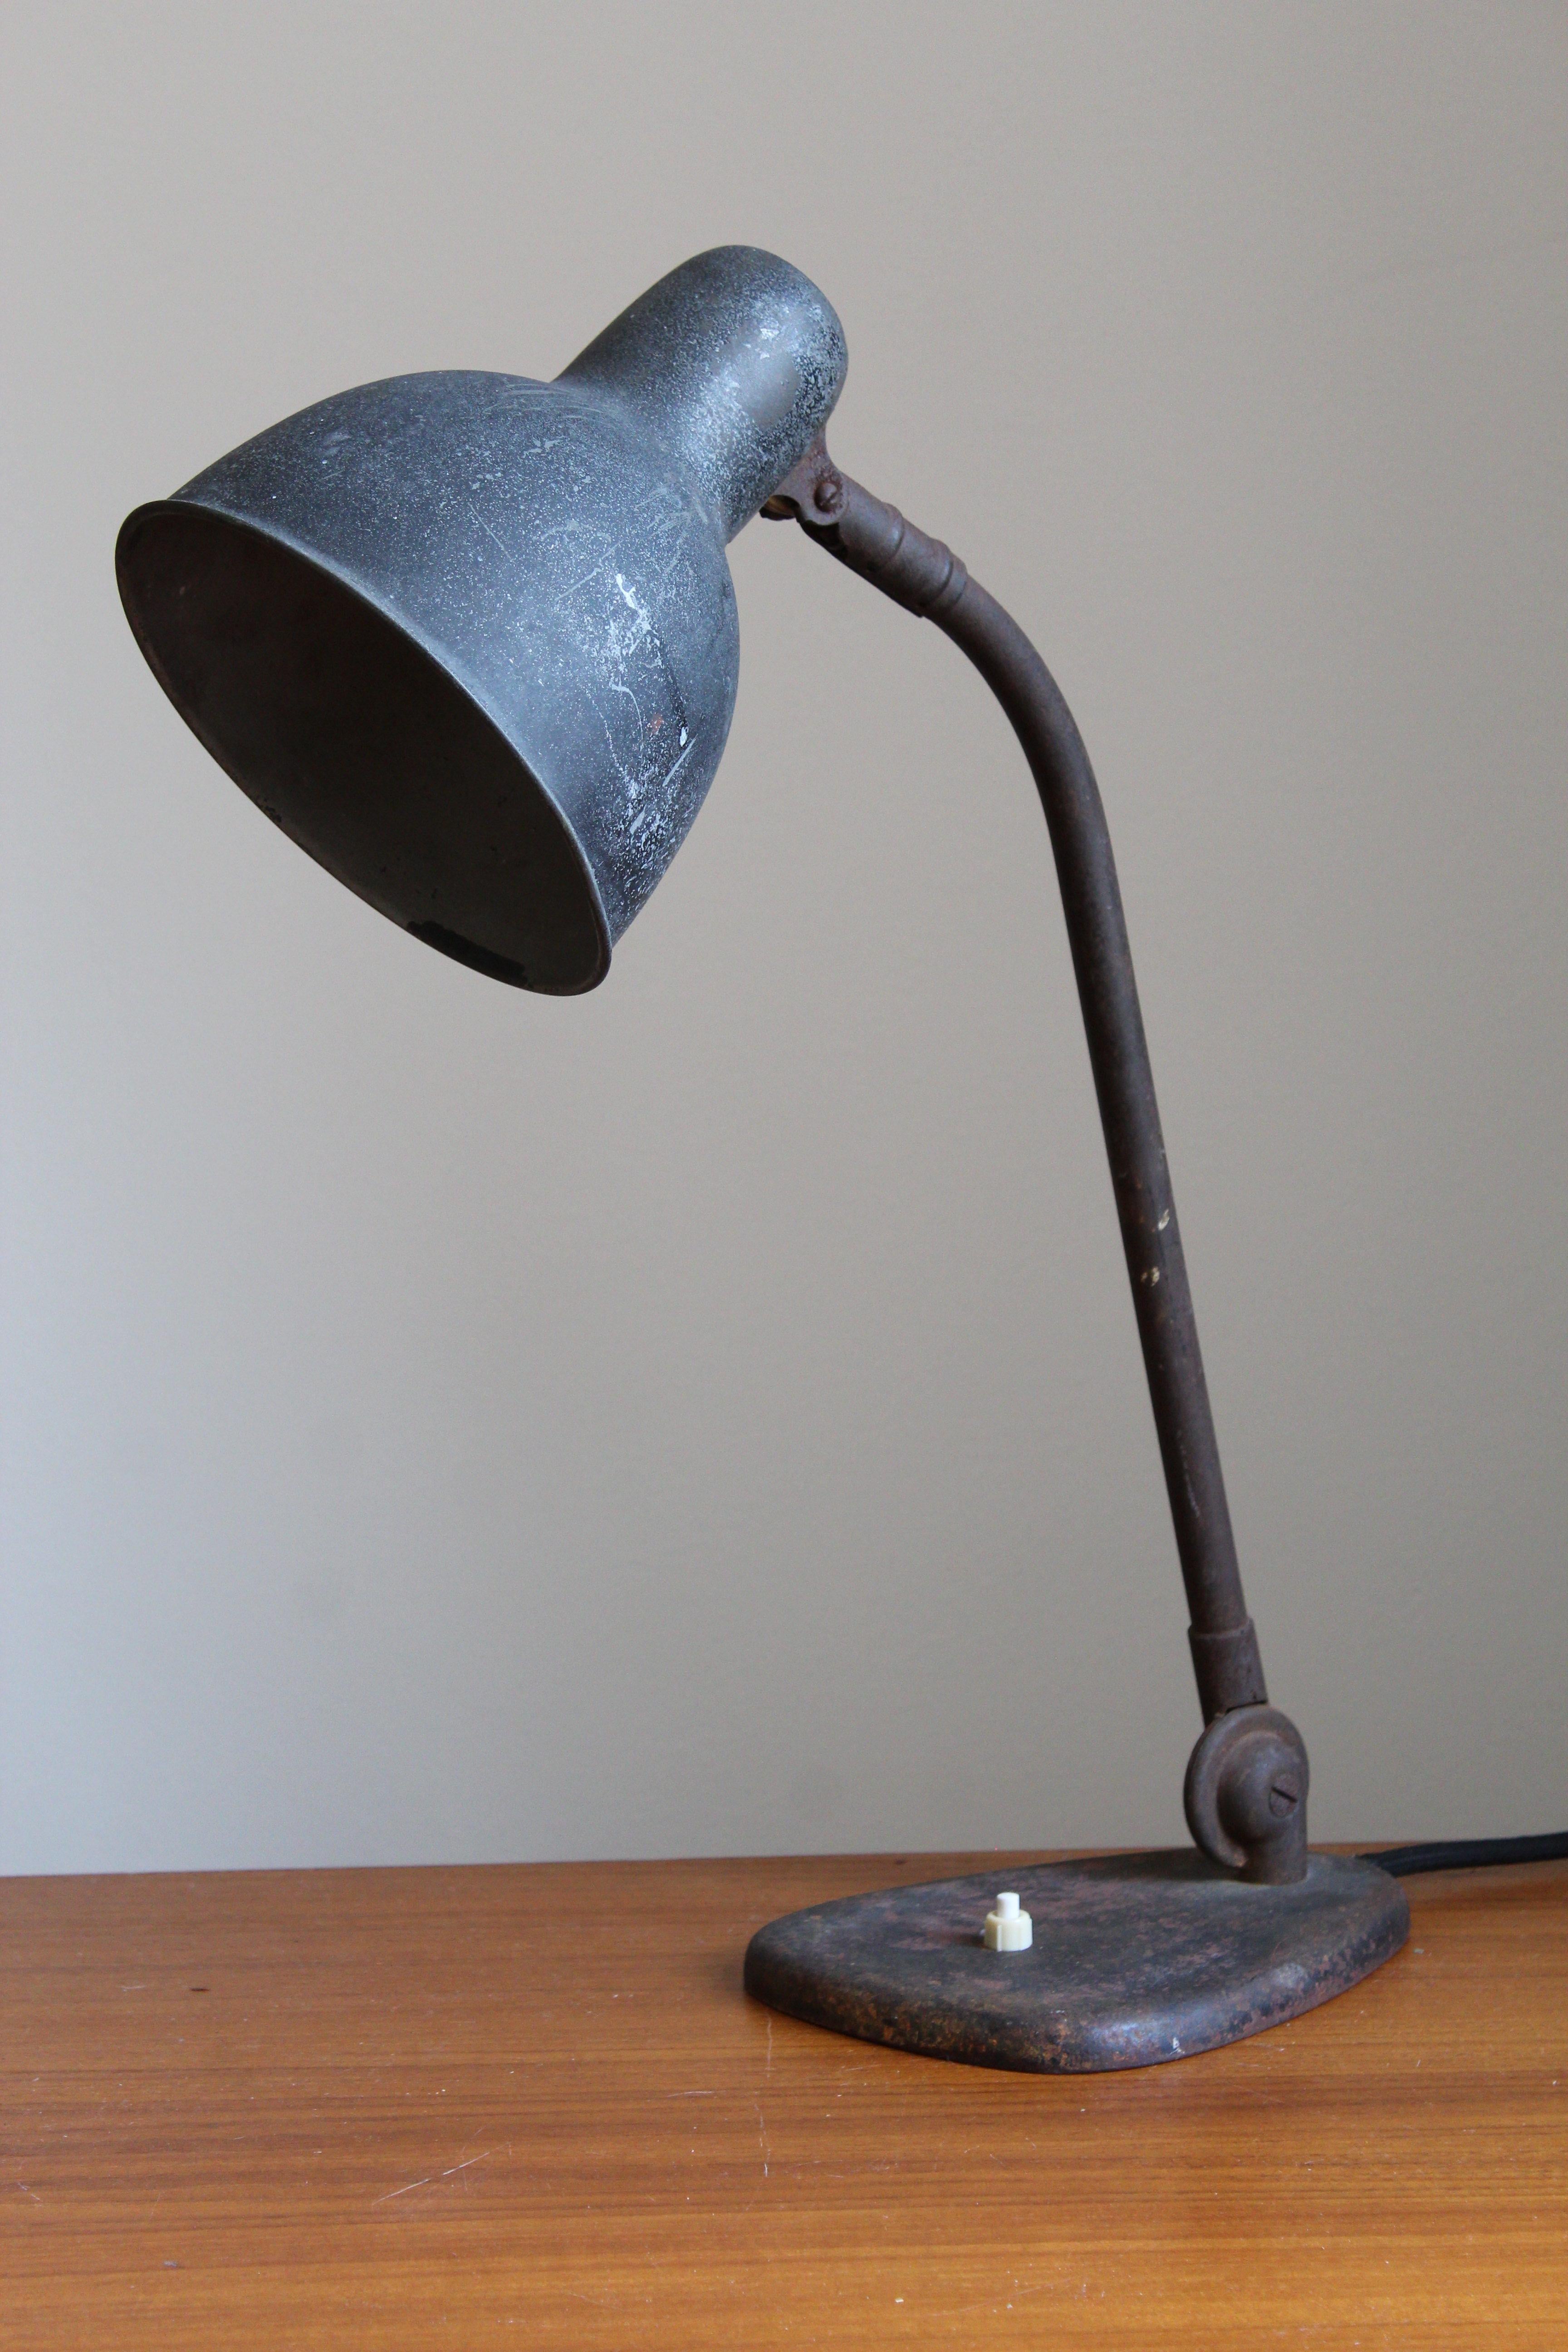 An adjustable table lamp / desk light. Germany, 1940s.


